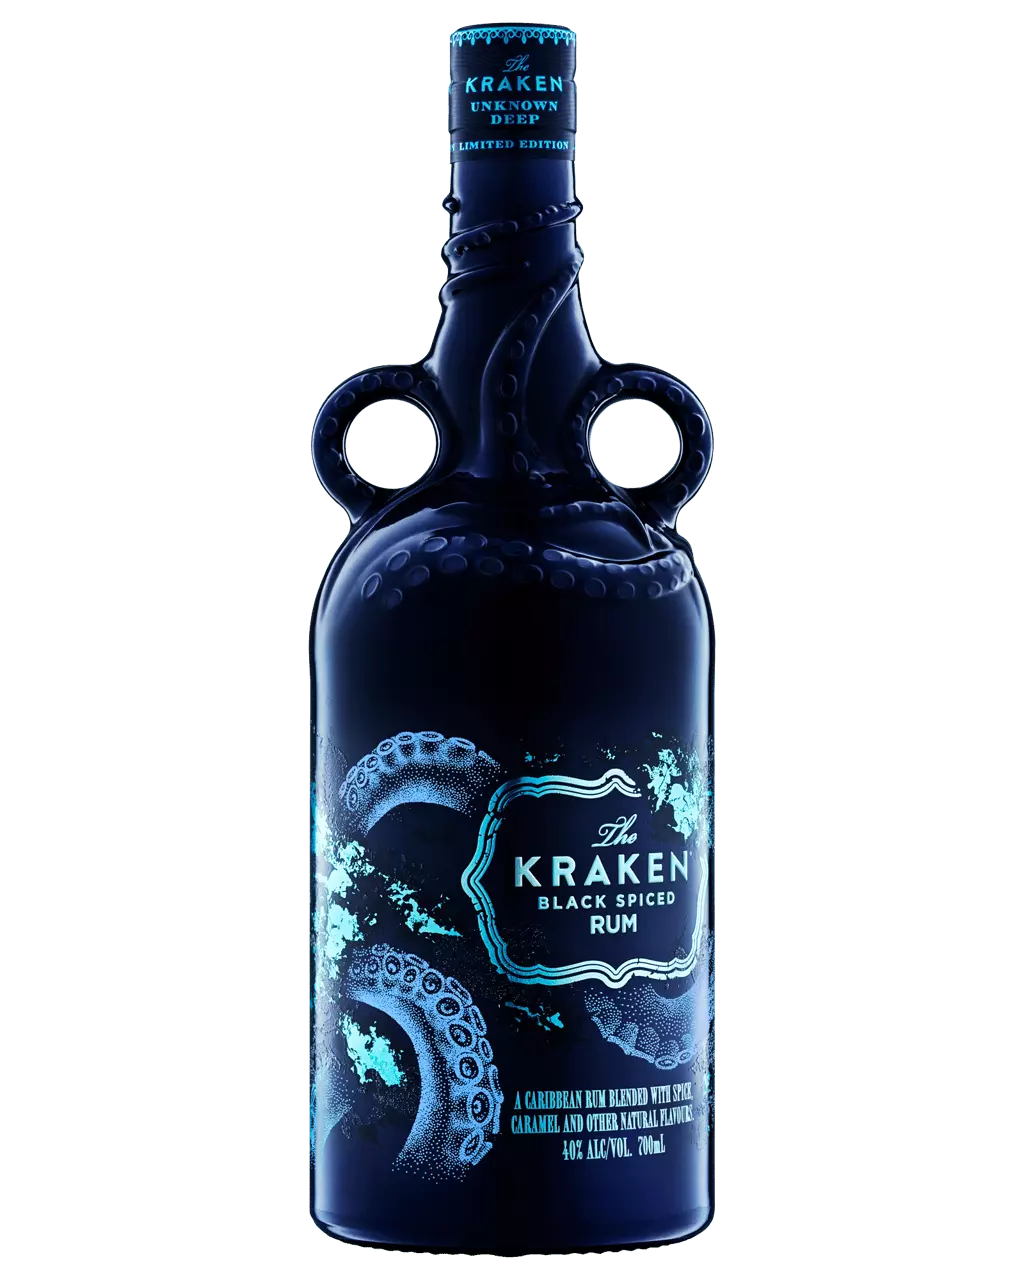 Kraken Black Spiced Deep Sea Bioluminescence rum 0,7L 40%